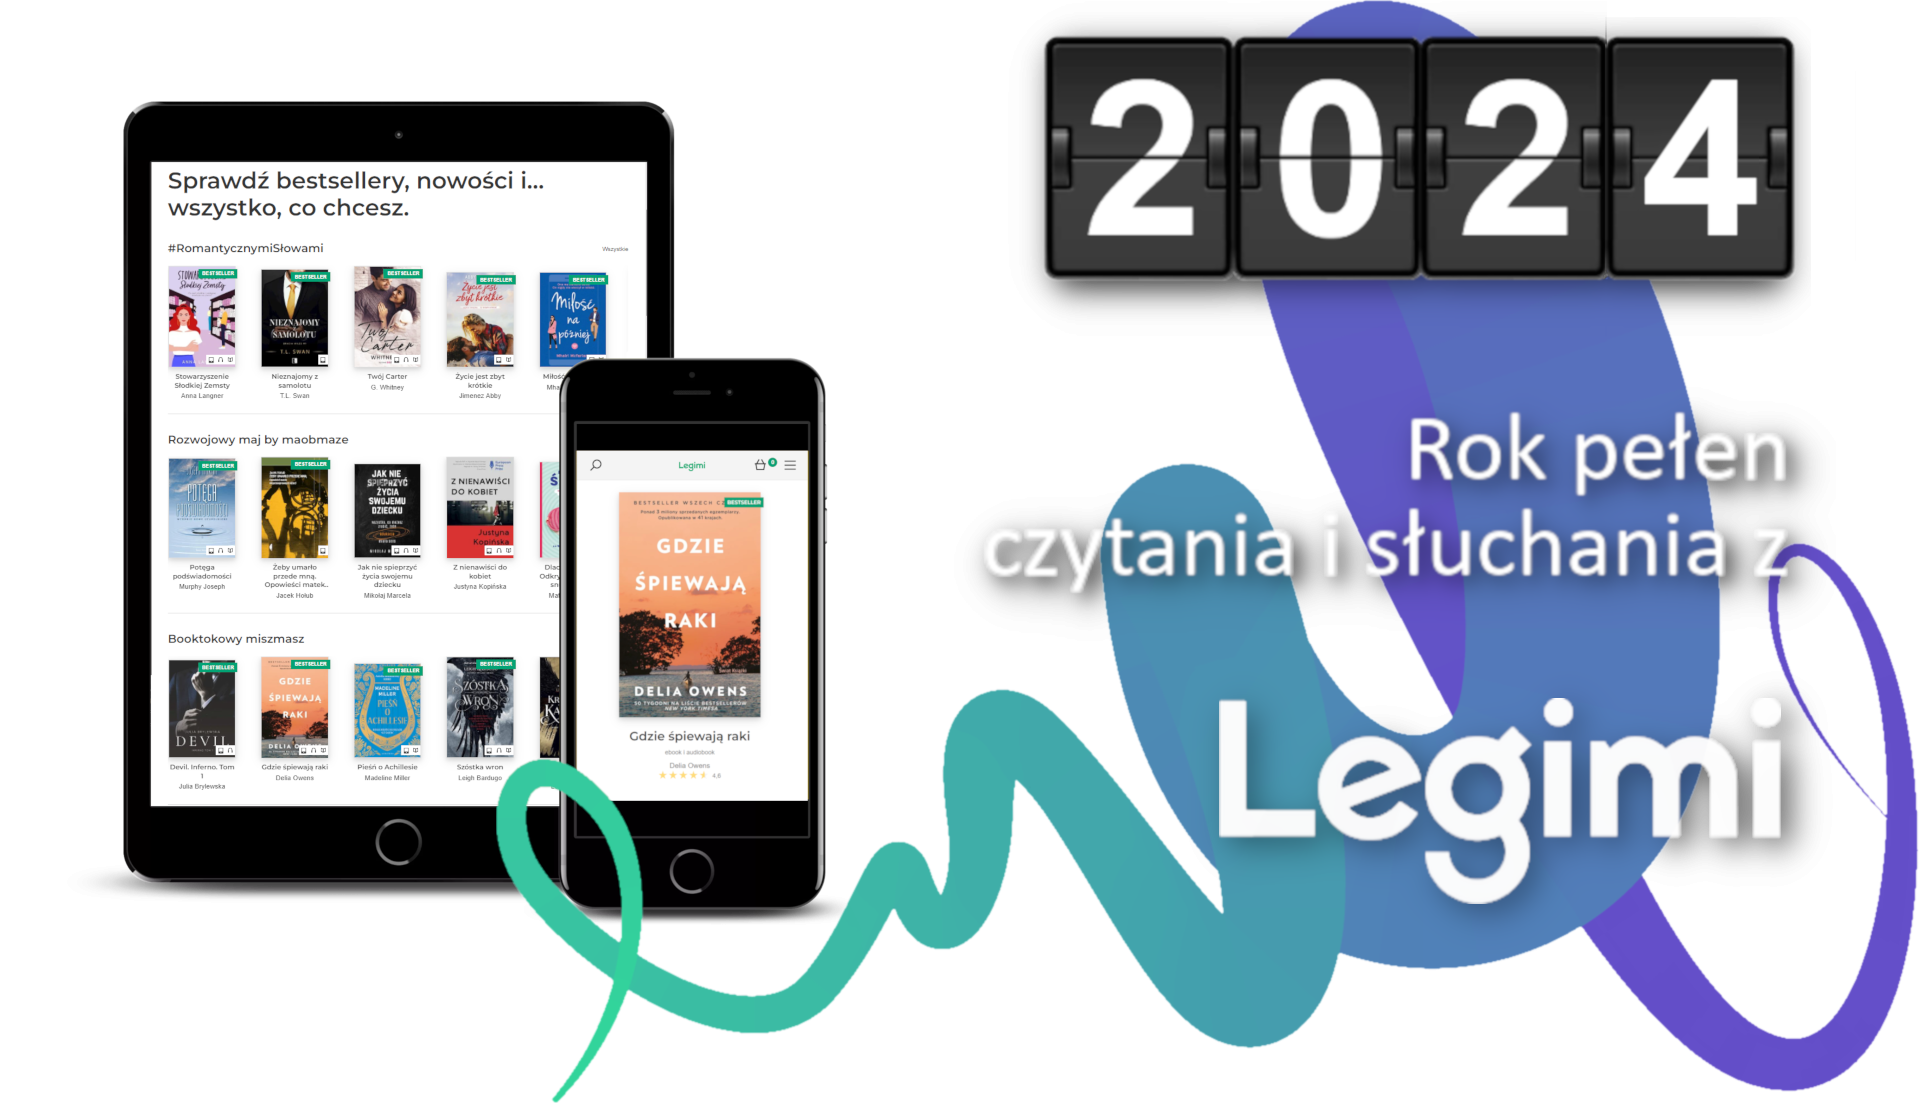 Slider promujący Legimi - logo i grafika Legimi, tablet, smartfon i kalendarz z rokiem 2023